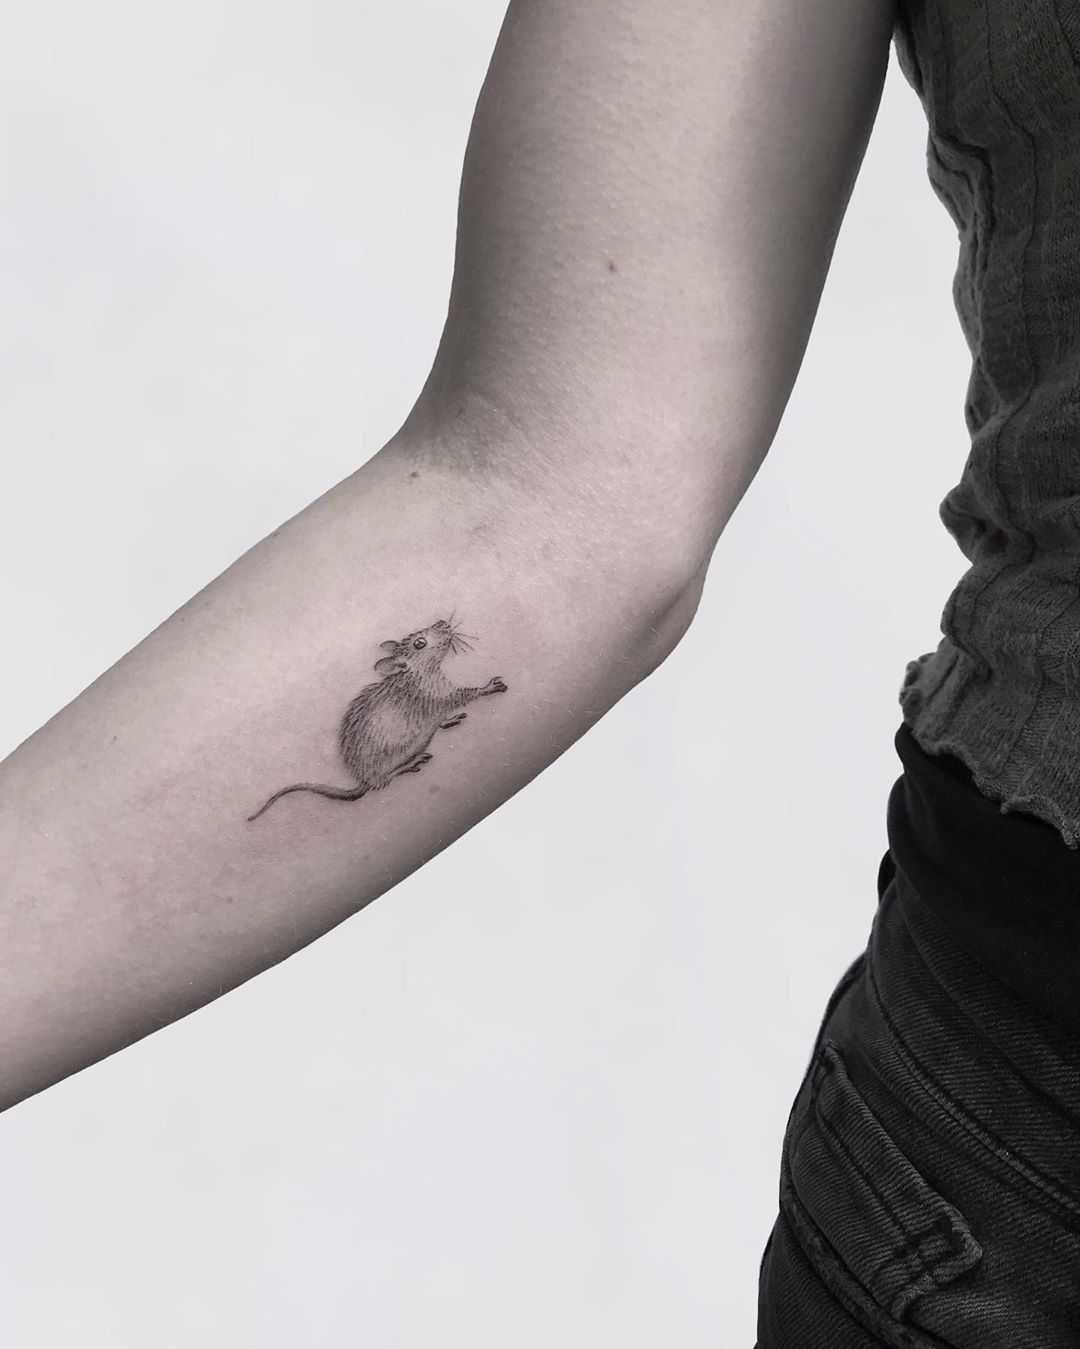 Little mouse tattoo by Oscar Jesus